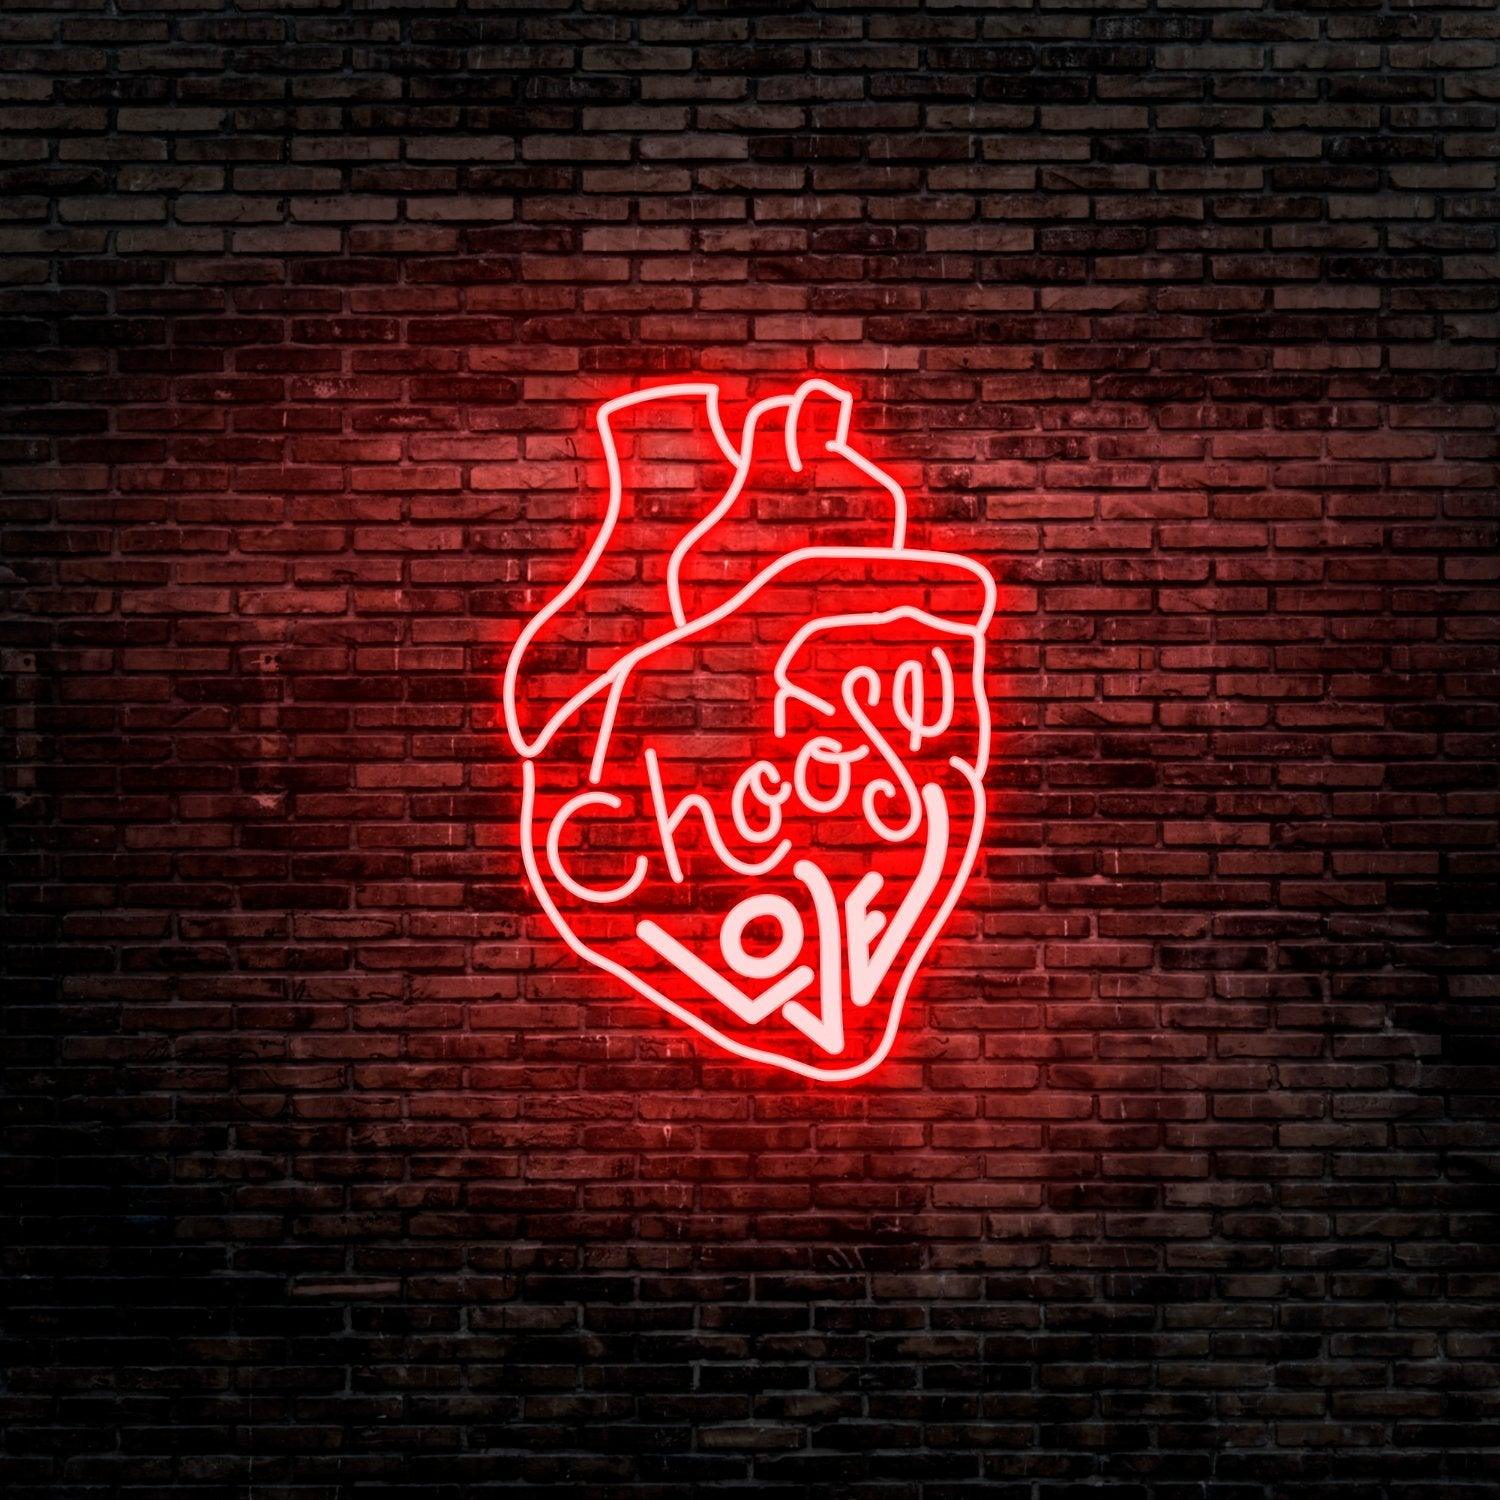 LOVE HEART NEON SIGN - Neon Guys